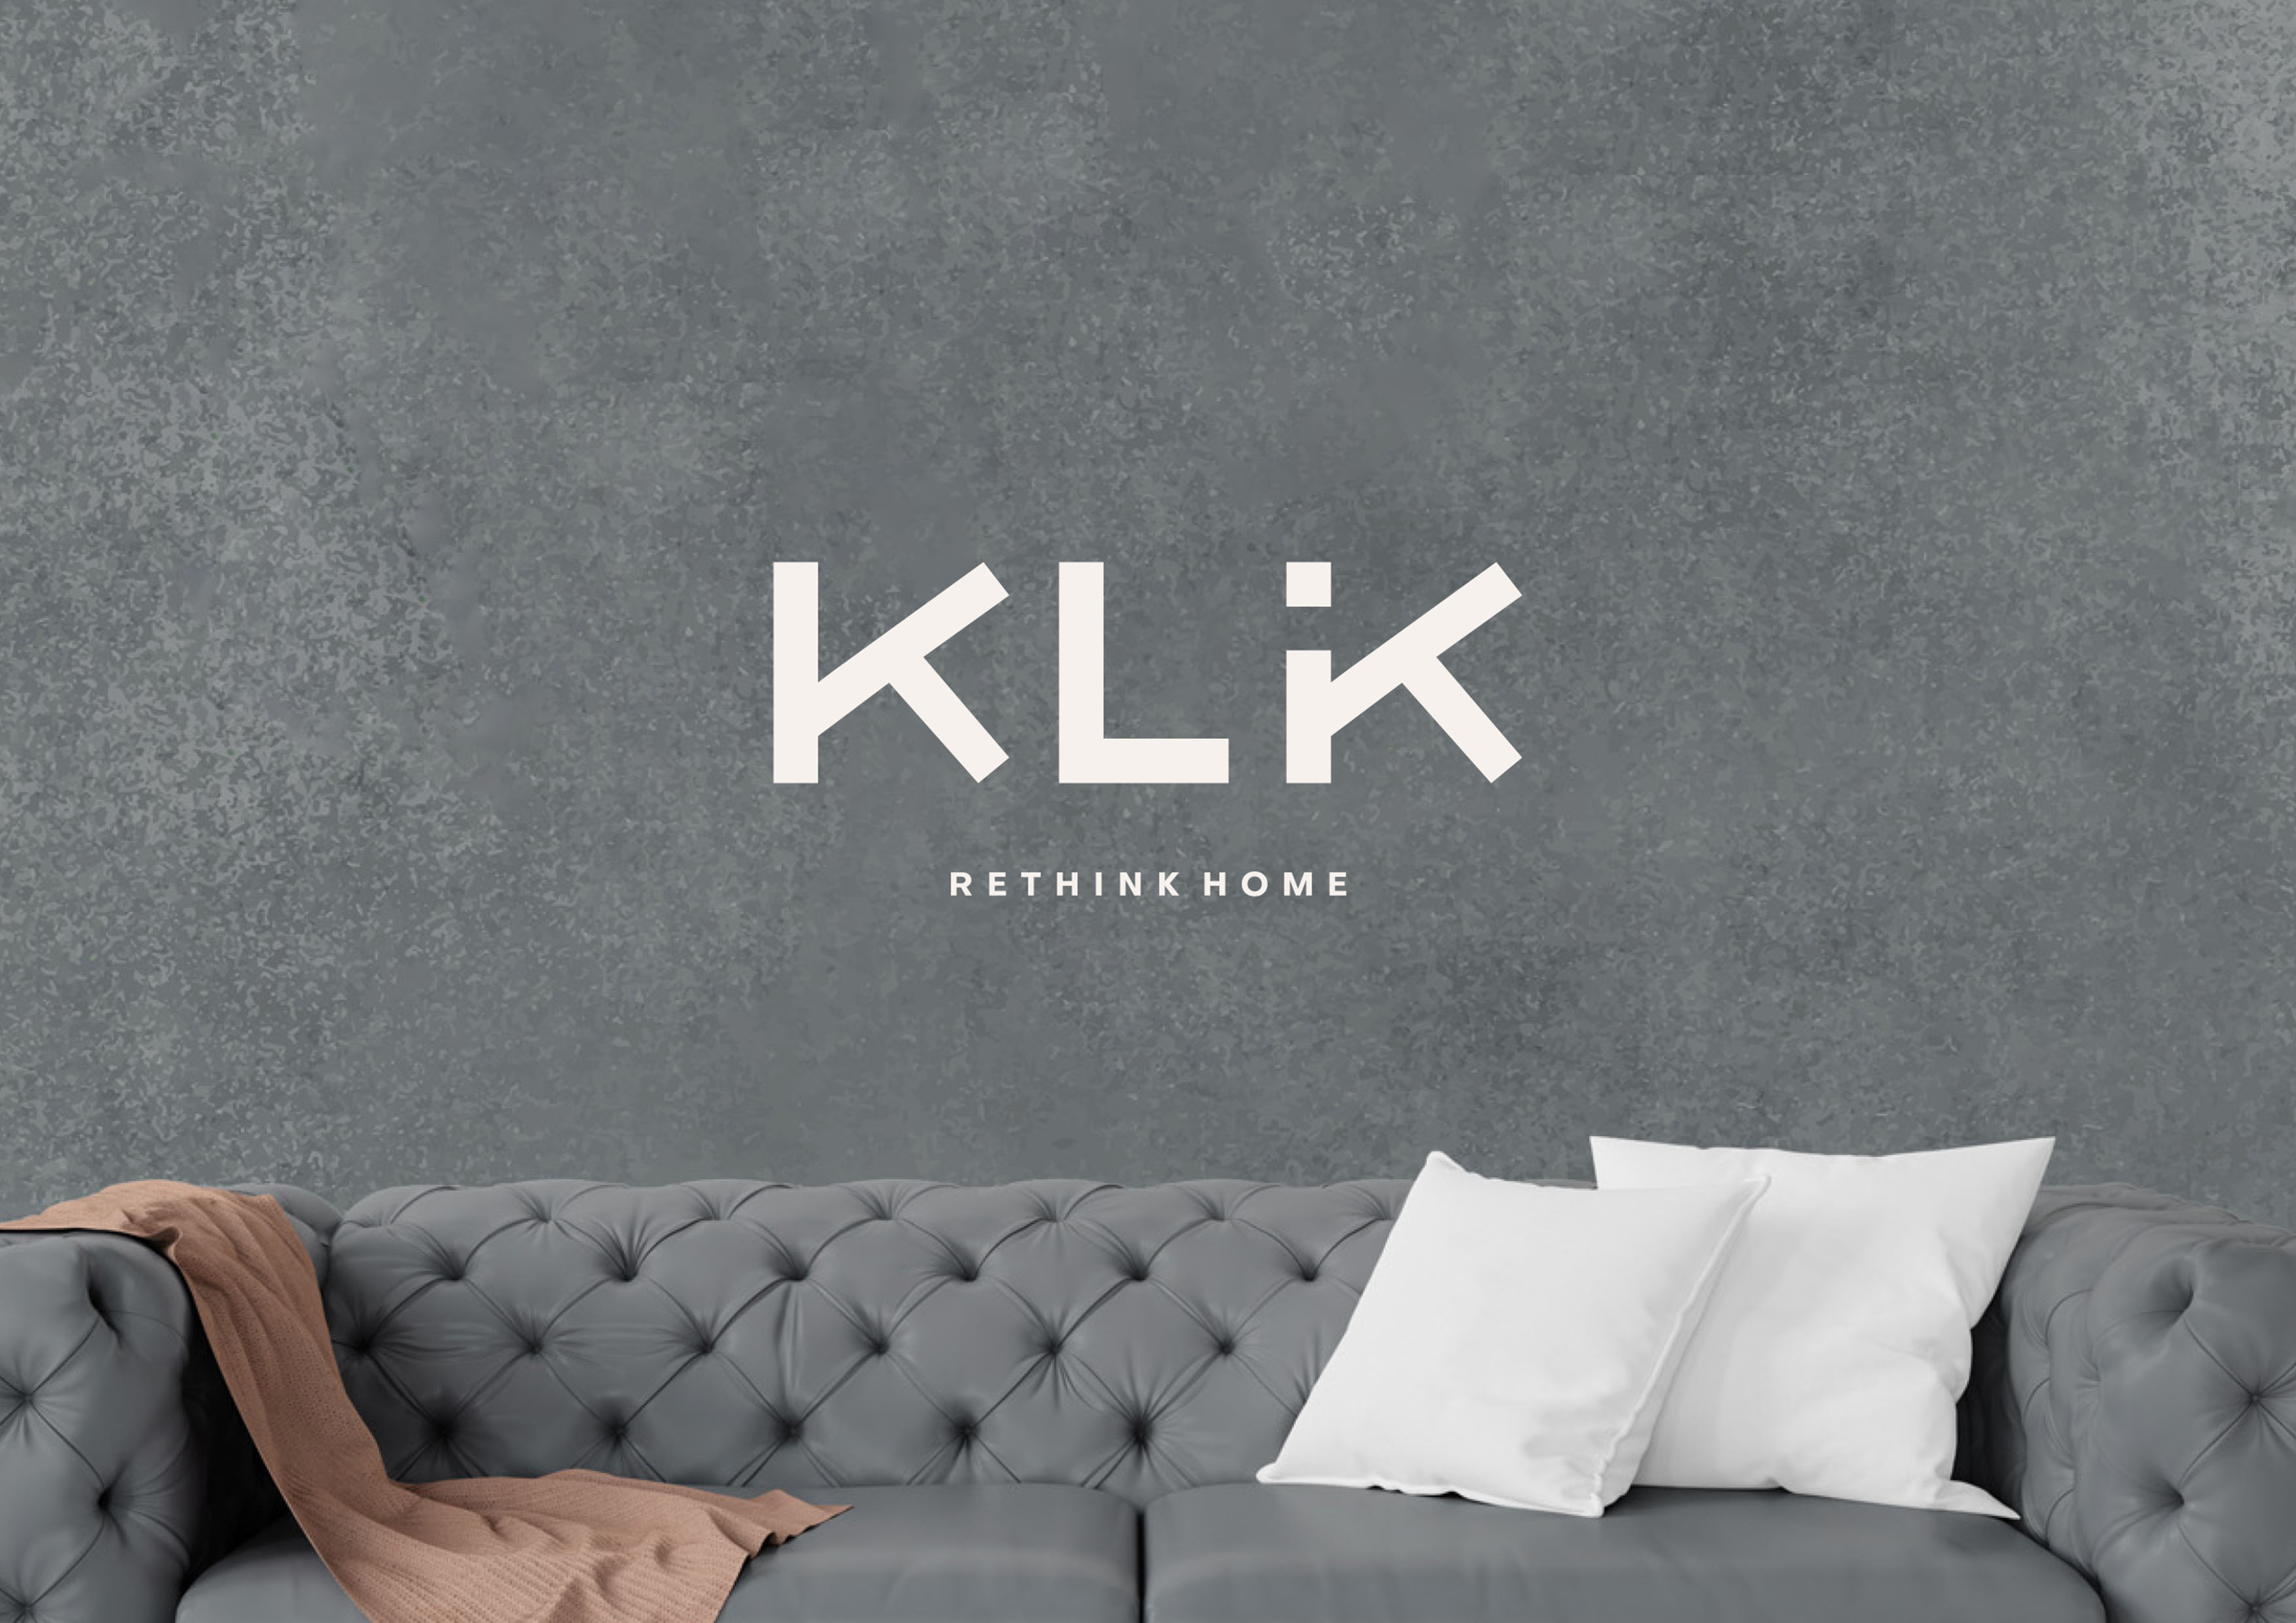 Rethinking Home: Klik Transforms the Furniture Landscape